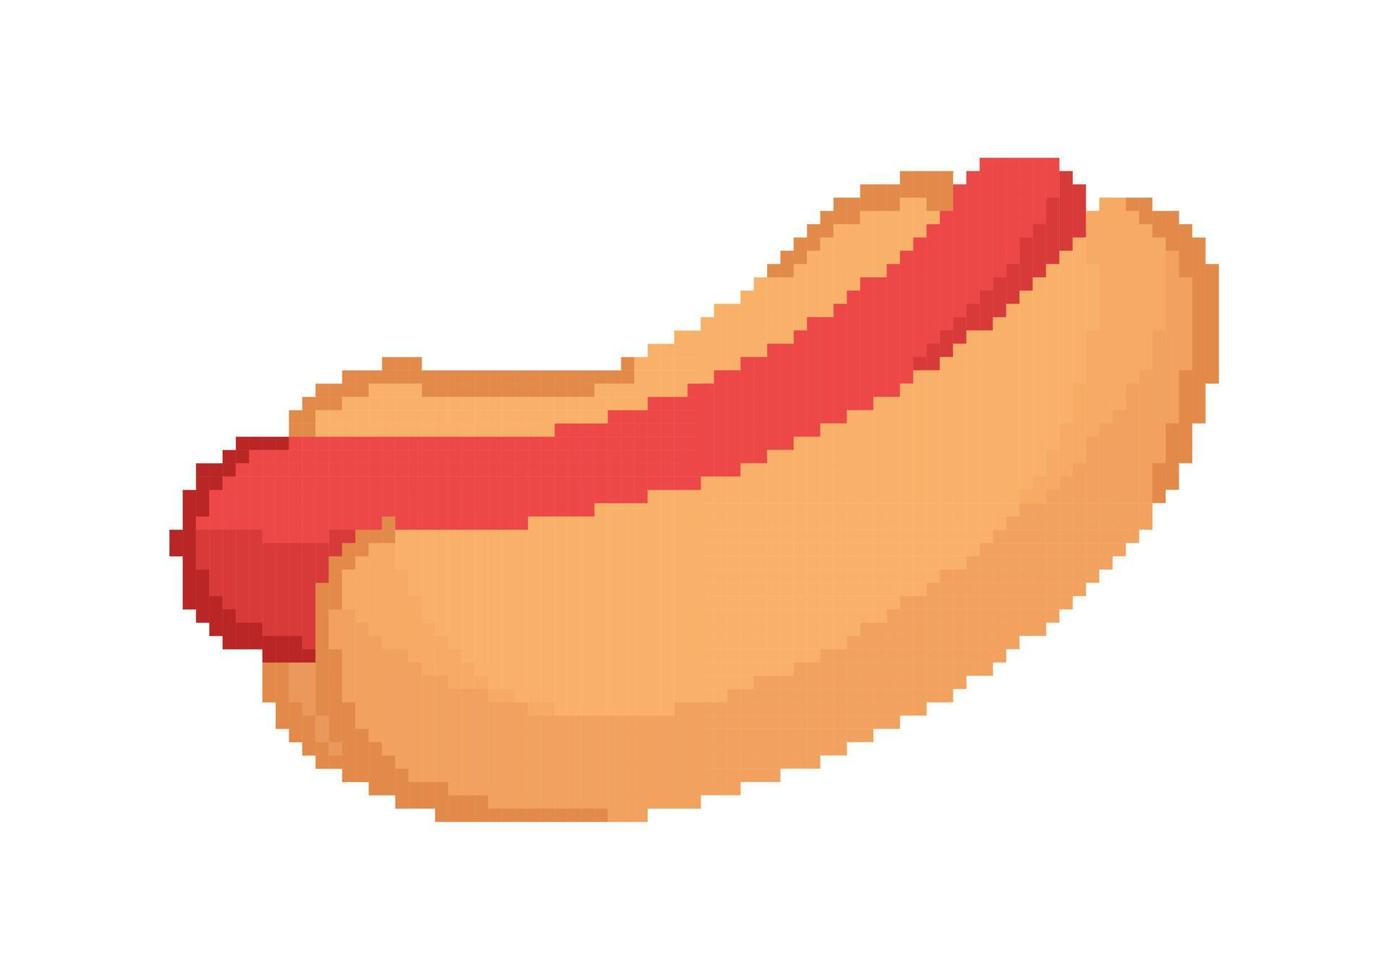 hot dog illustration on pixel theme vector